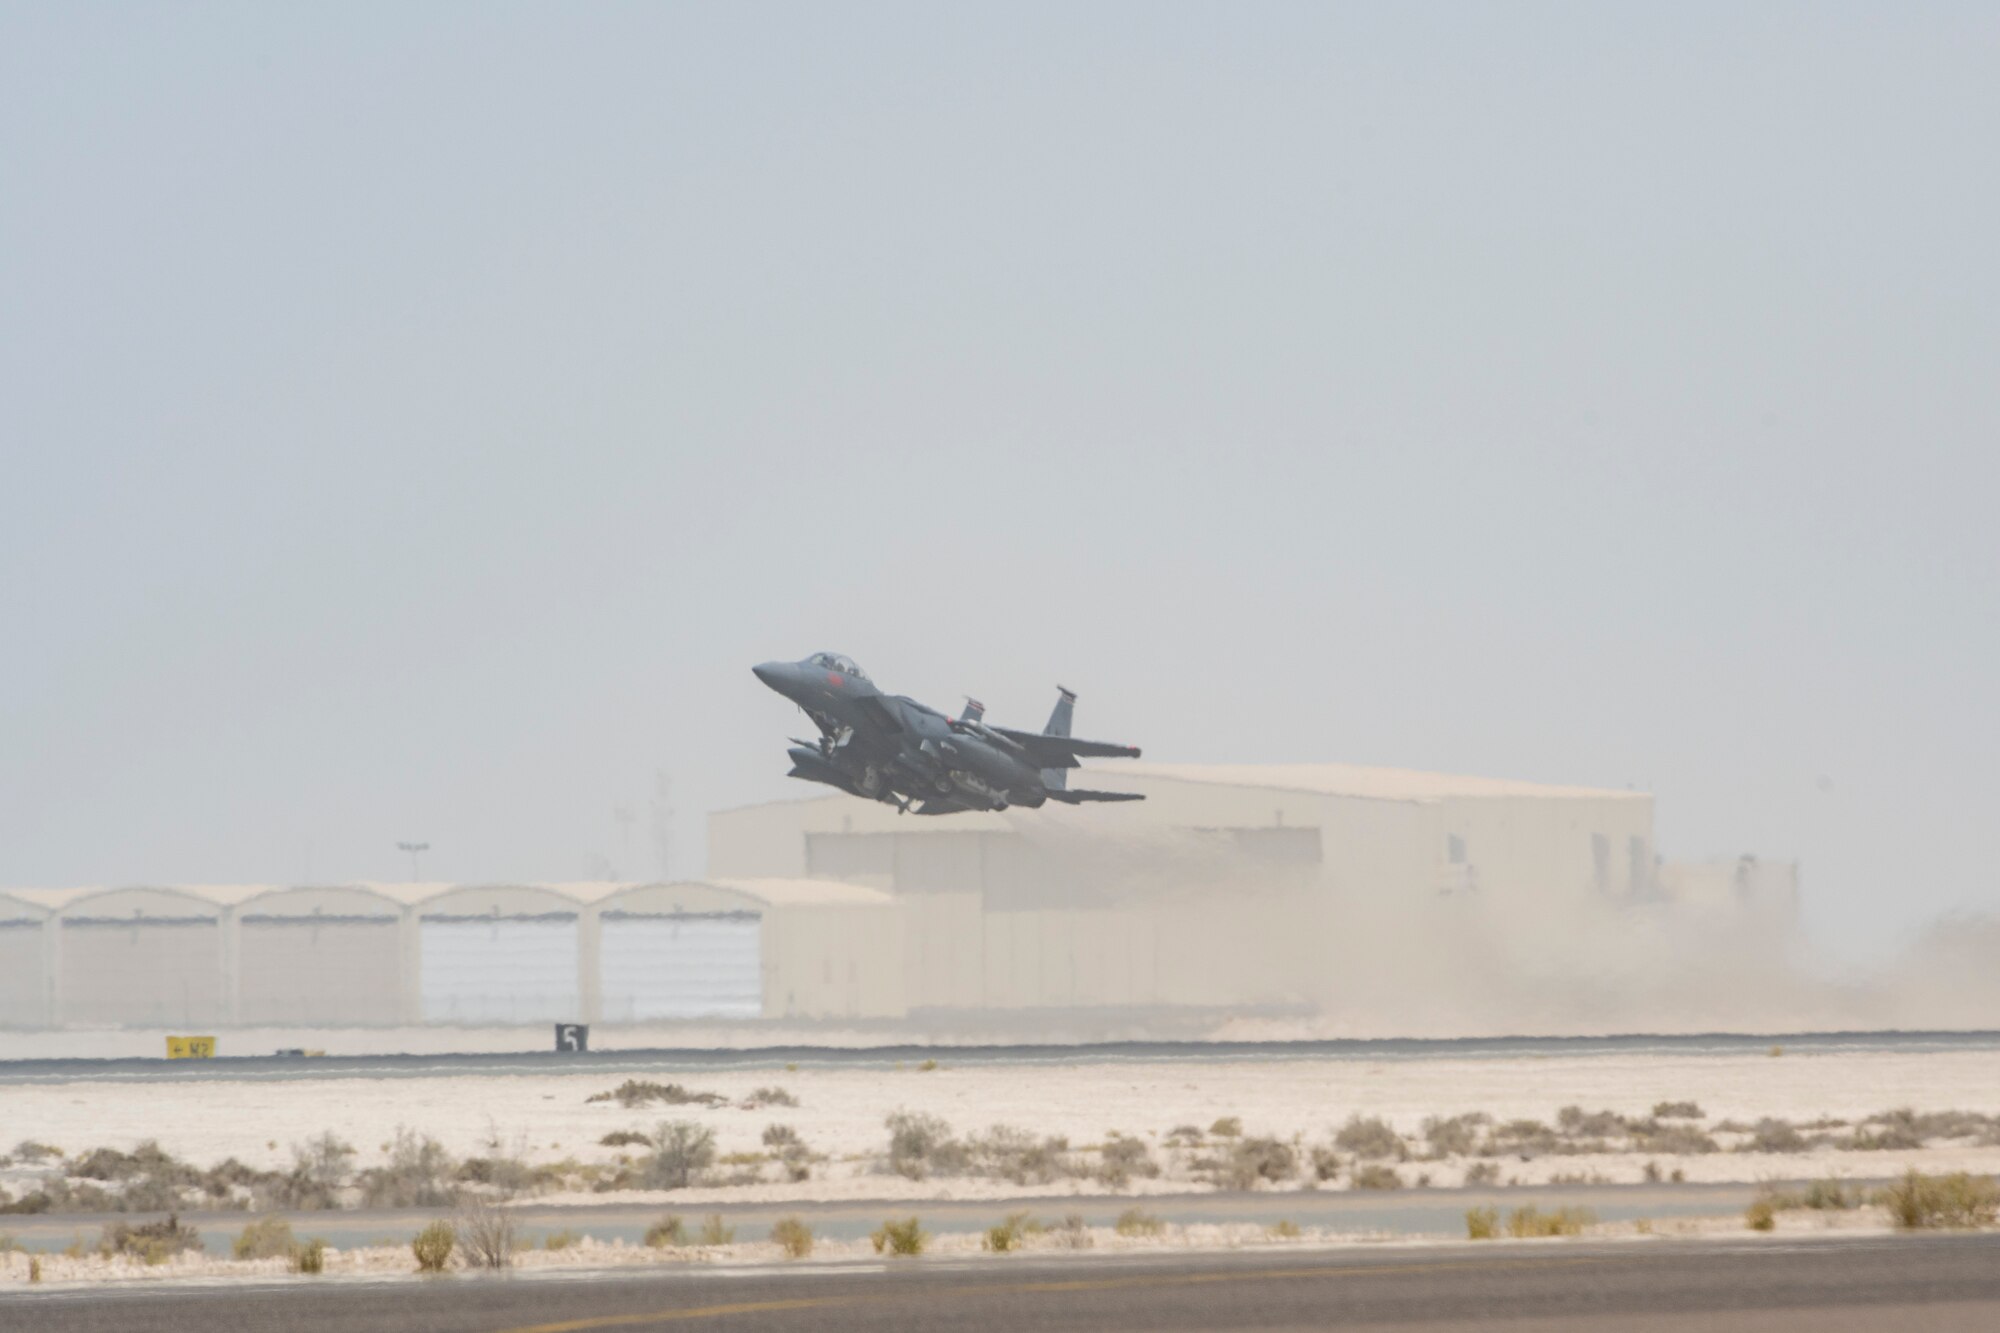 F-15 jet taking off